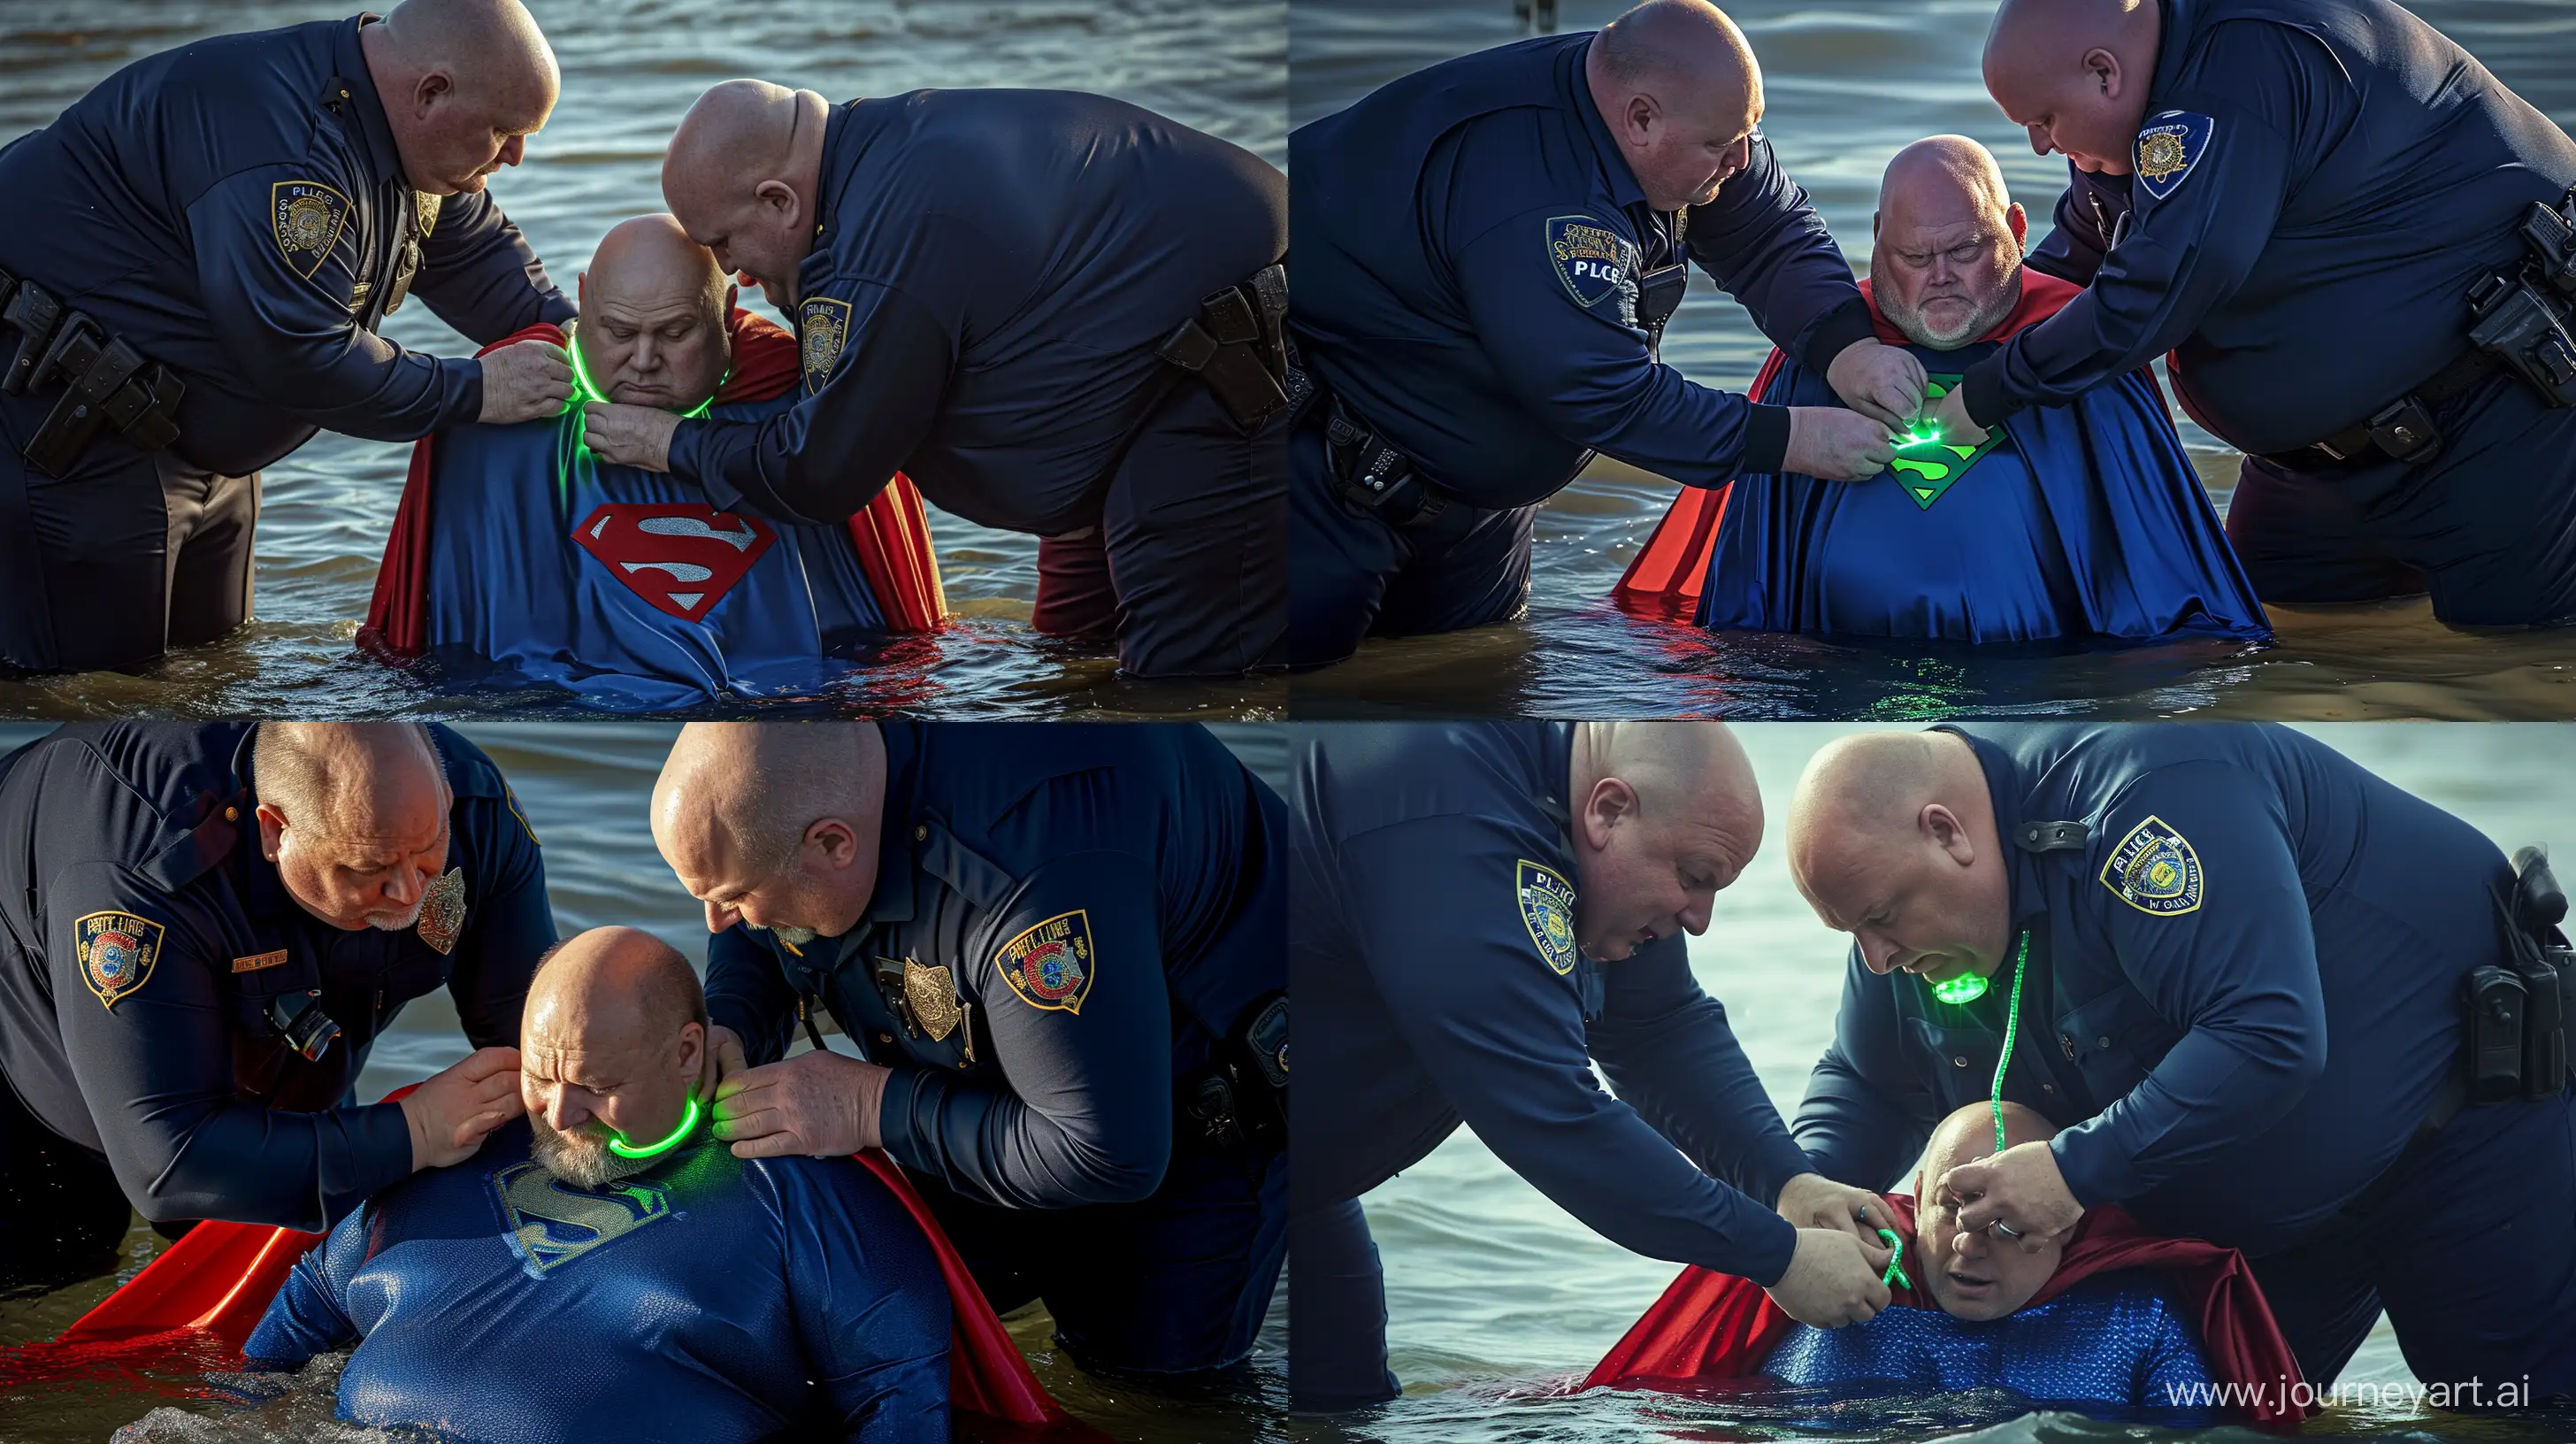 Elderly-Men-in-Navy-Police-Uniforms-Collaring-Superman-in-Water